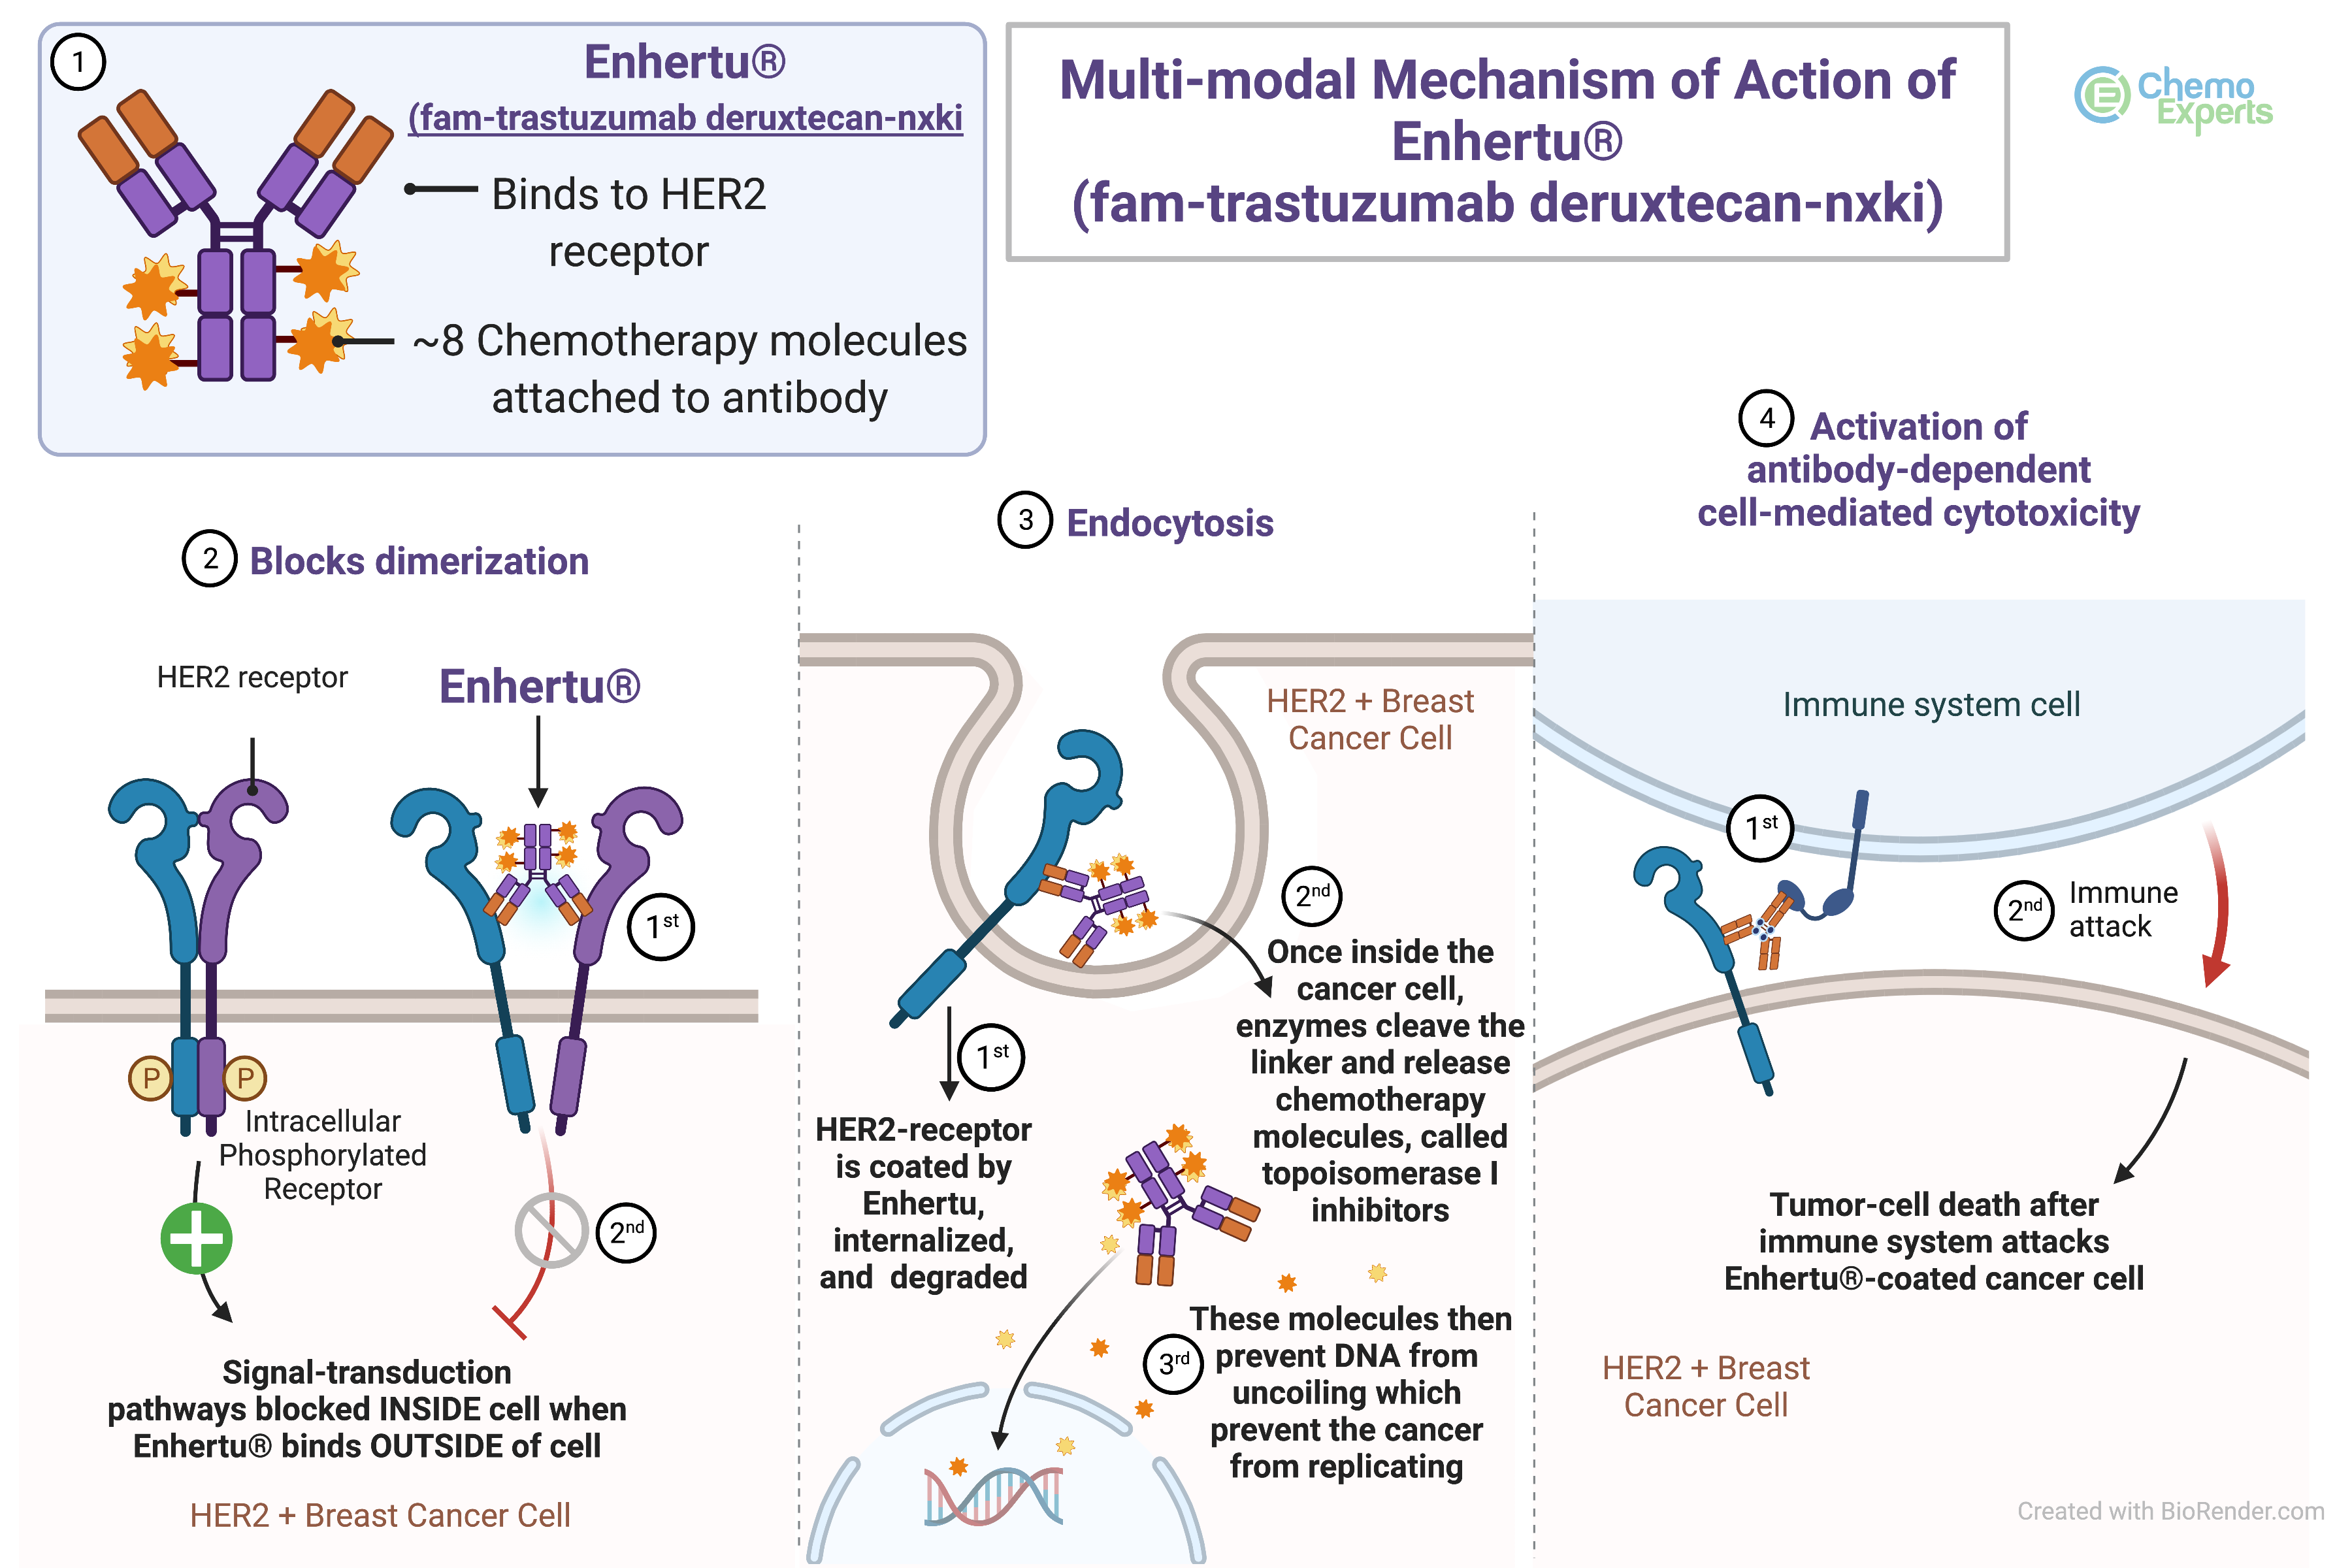 4 mechanisms of action of Enhertu